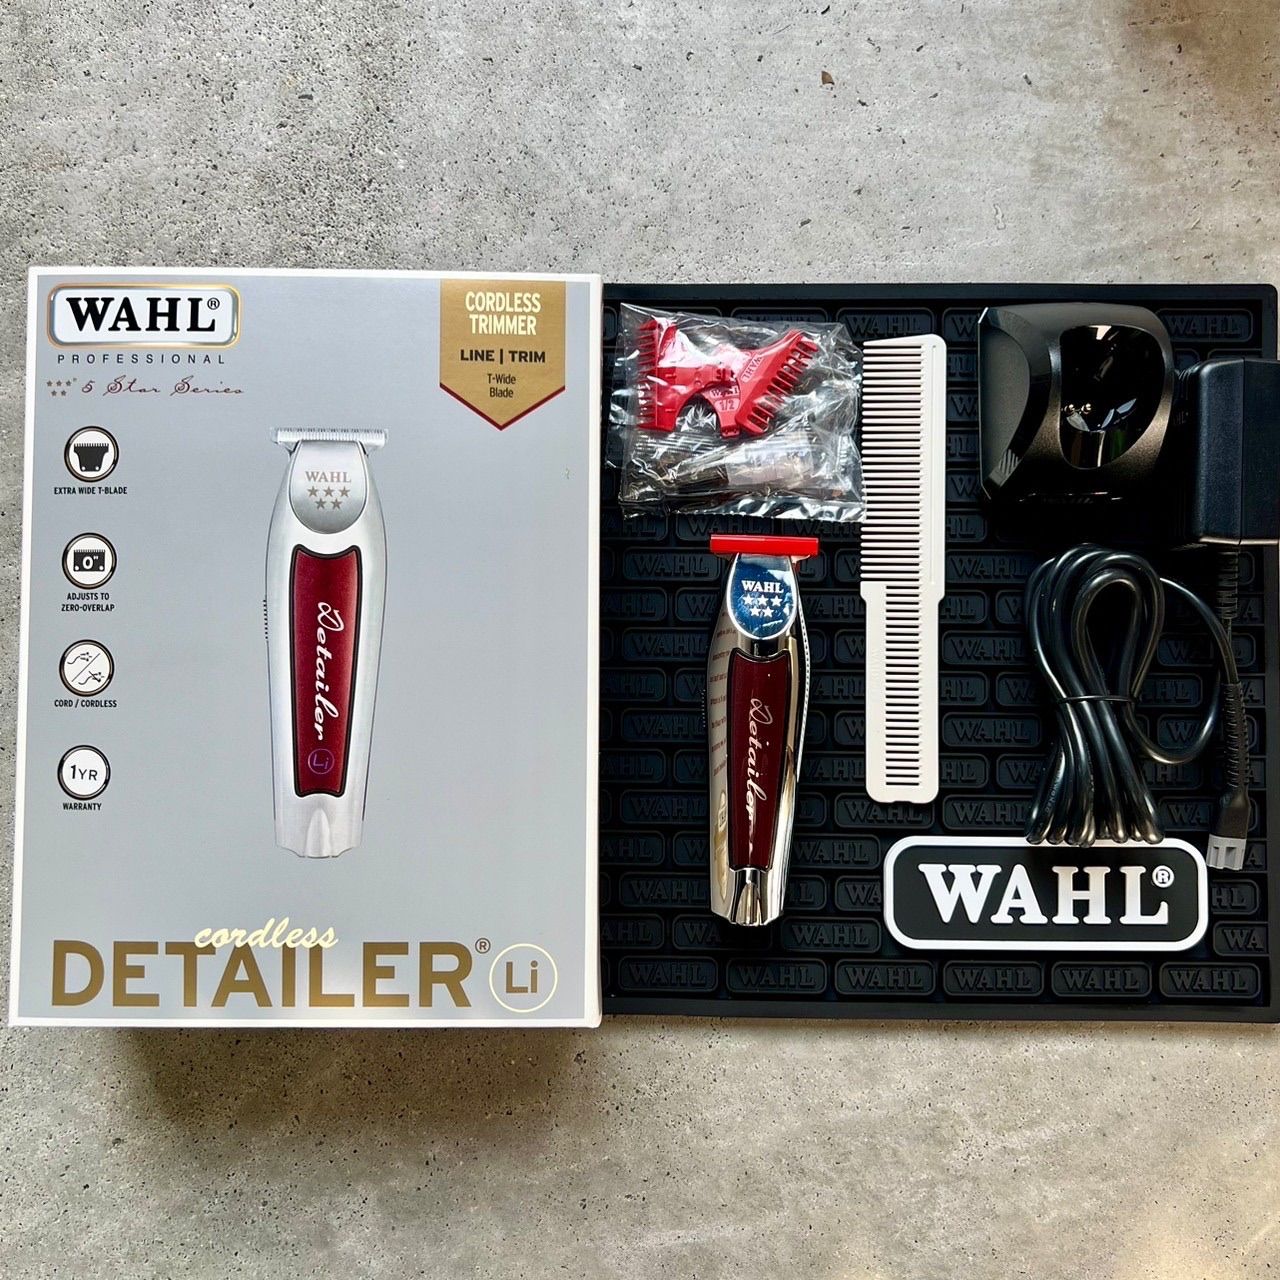 WAHL【日本正規品】5star コードレス ディテイラー Li ウォール